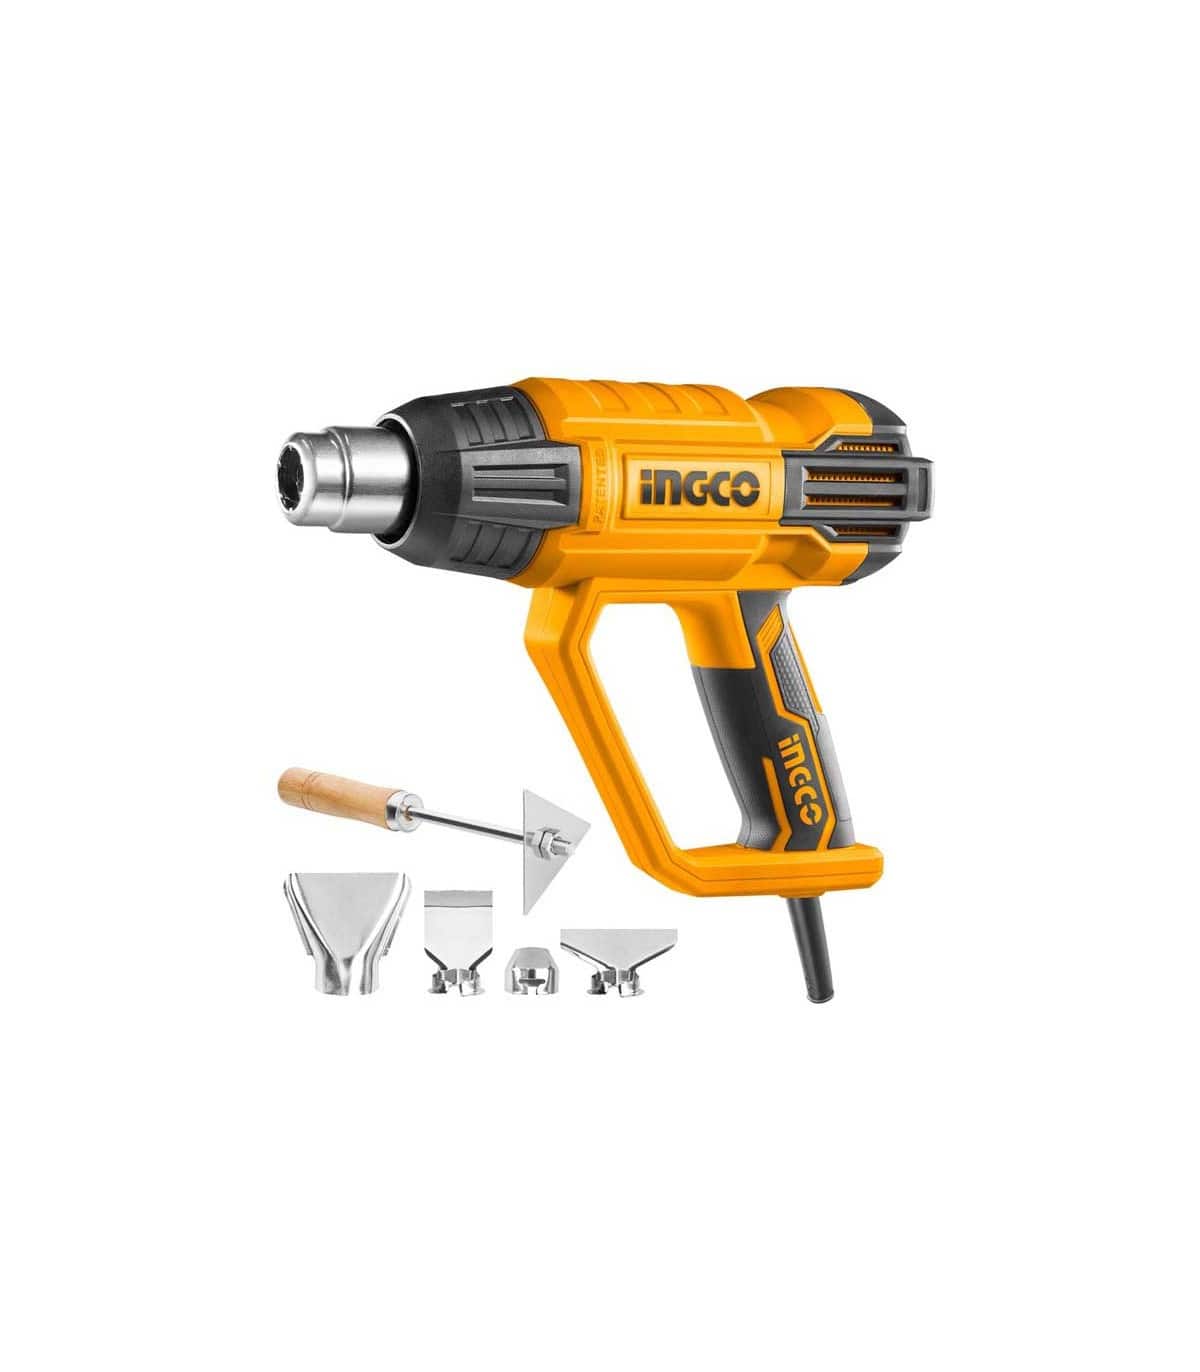 Ingco Multi Speed Heat Gun 2000W - HG200028 | Buy Online in Accra, Ghana - Supply Master Heat Gun Buy Tools hardware Building materials